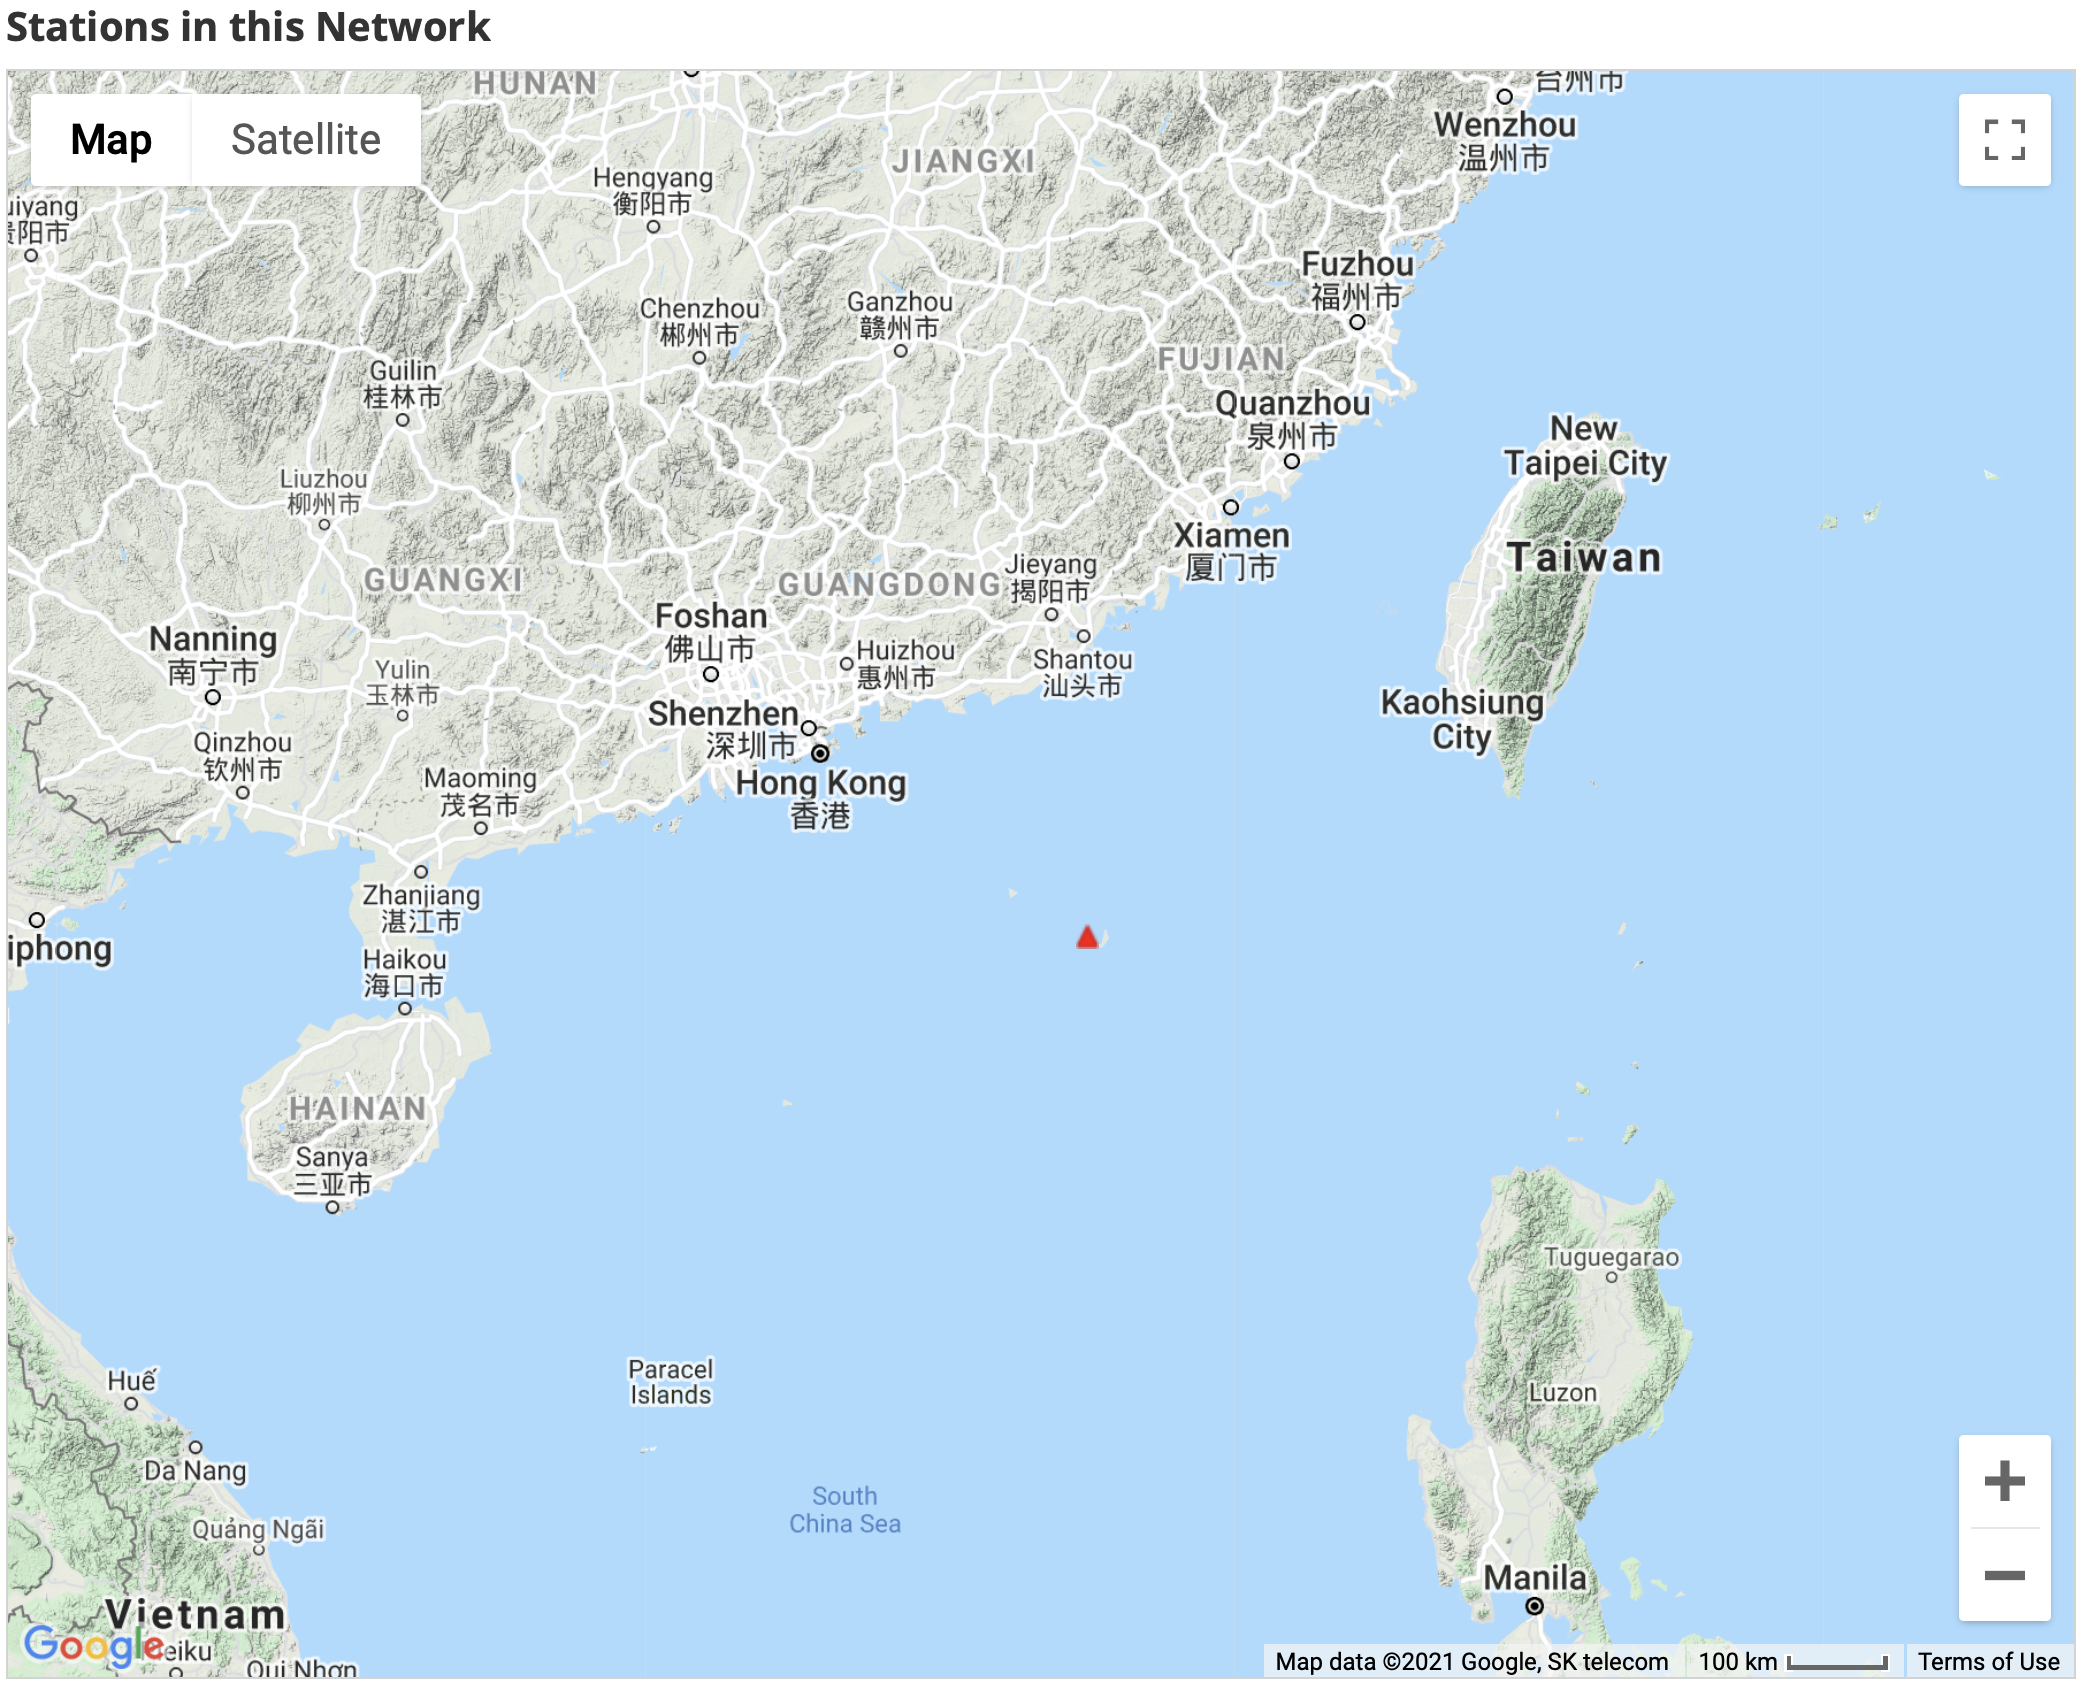 YD2019: South China Sea Pratas Island